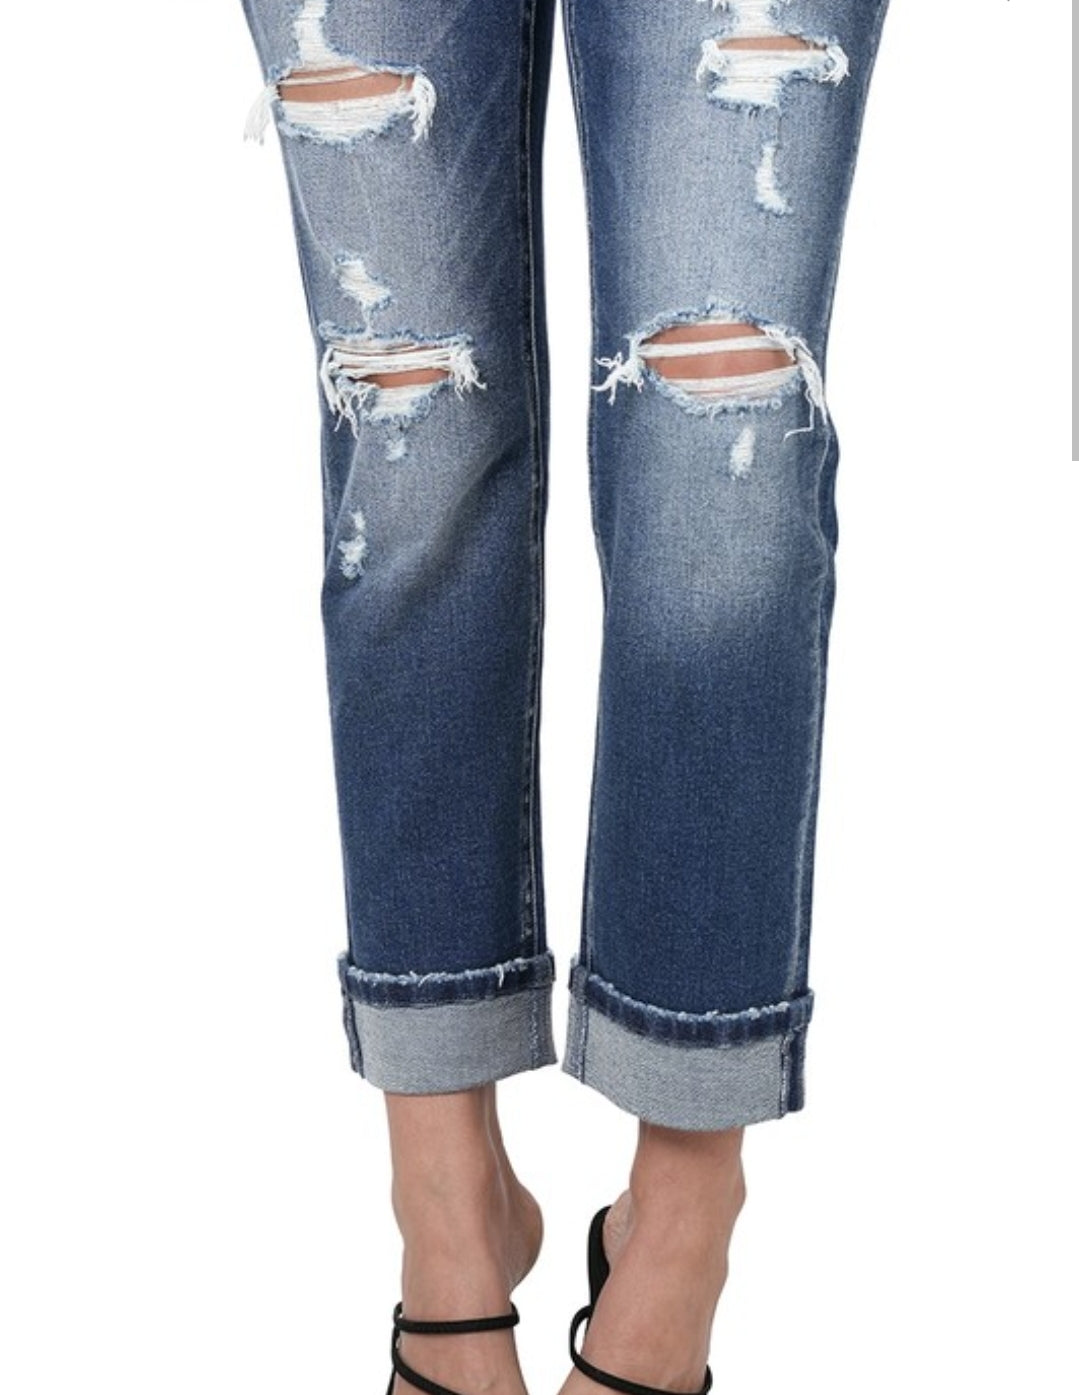 Distressed Cuffed Jean Pants * on sale